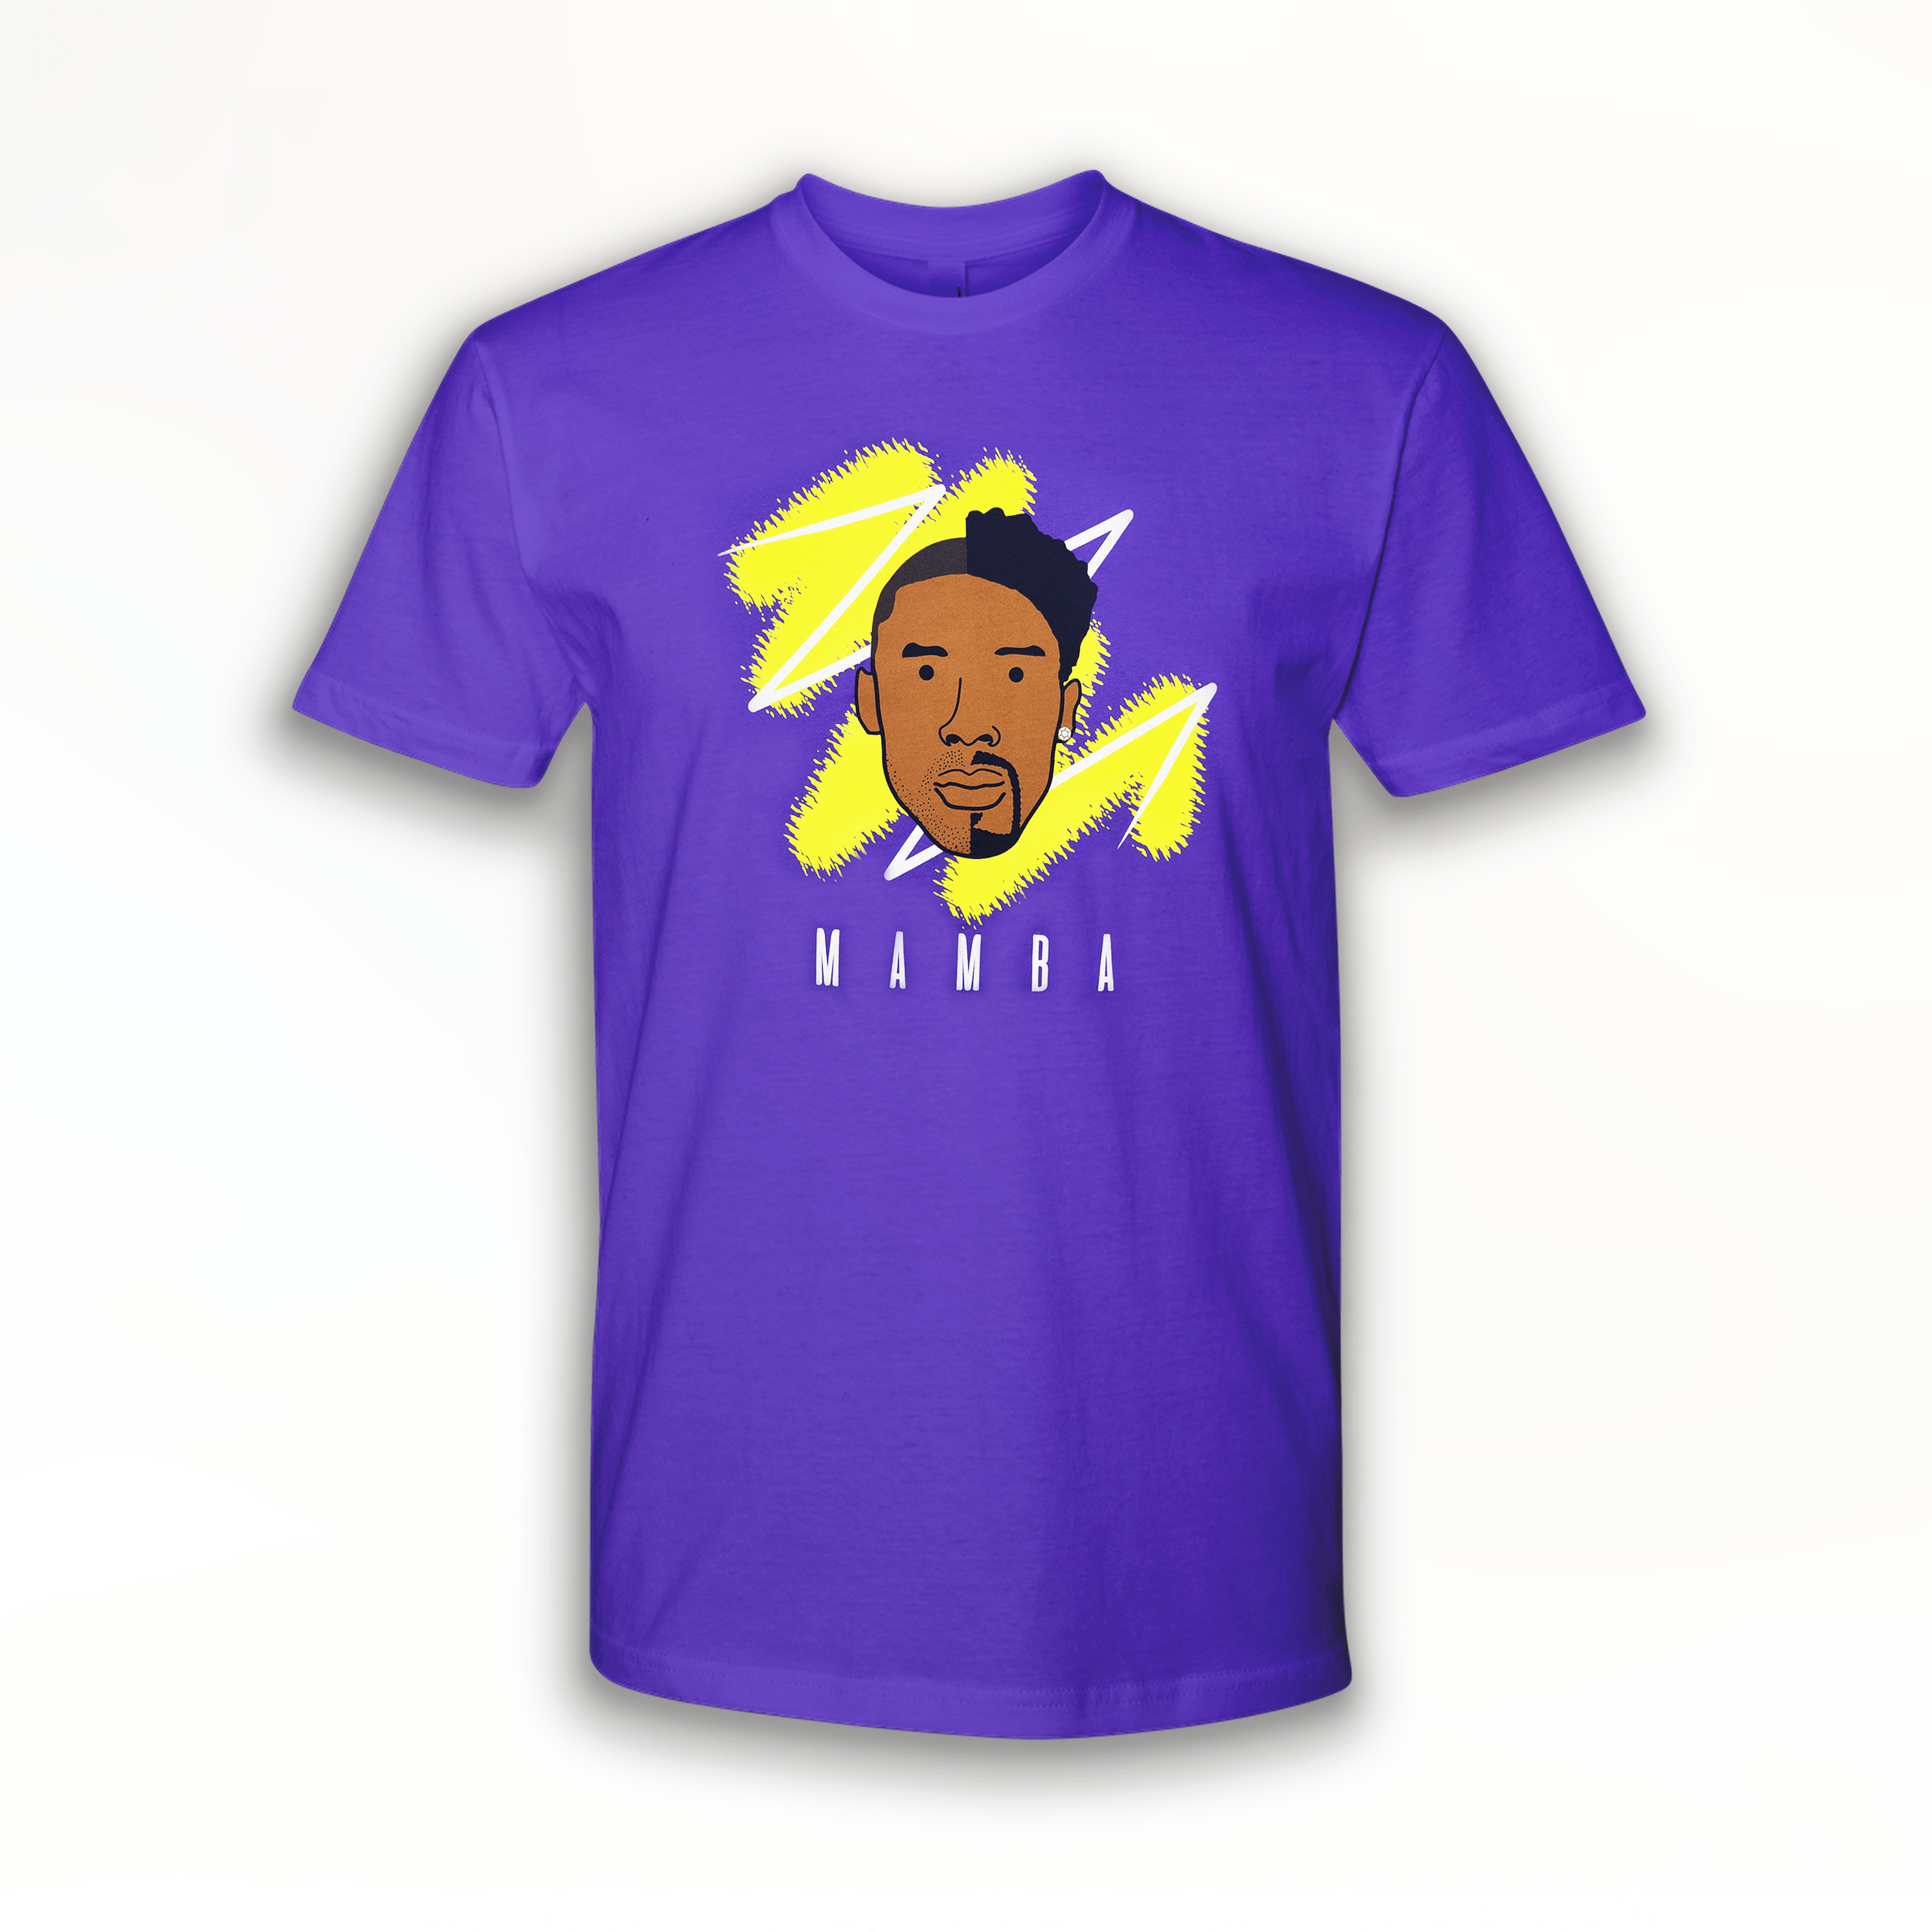 Kobe Bryant | Mamba Mentality Unisex T-Shirt